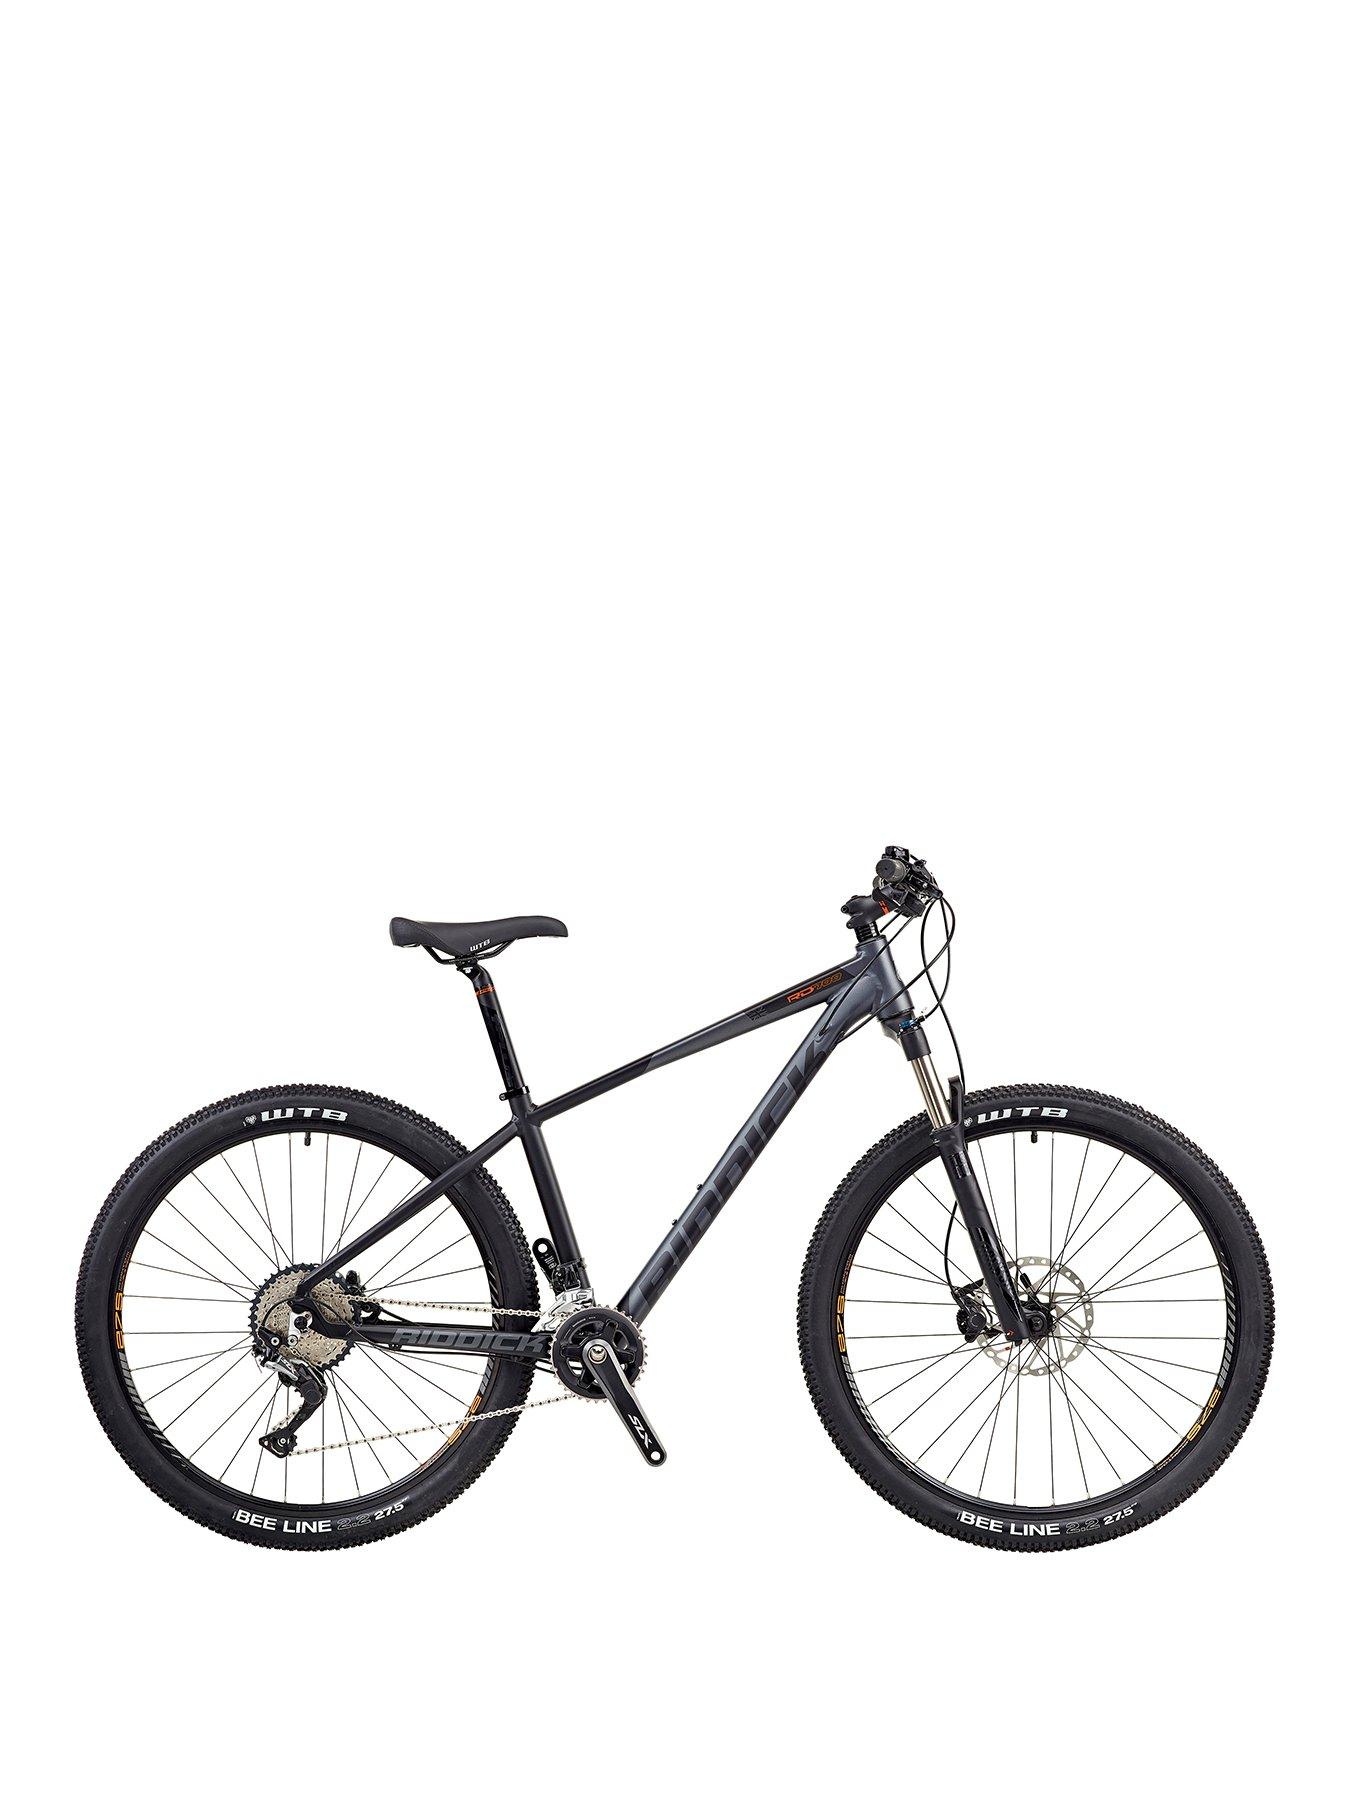 16 inch frame mens mountain bike